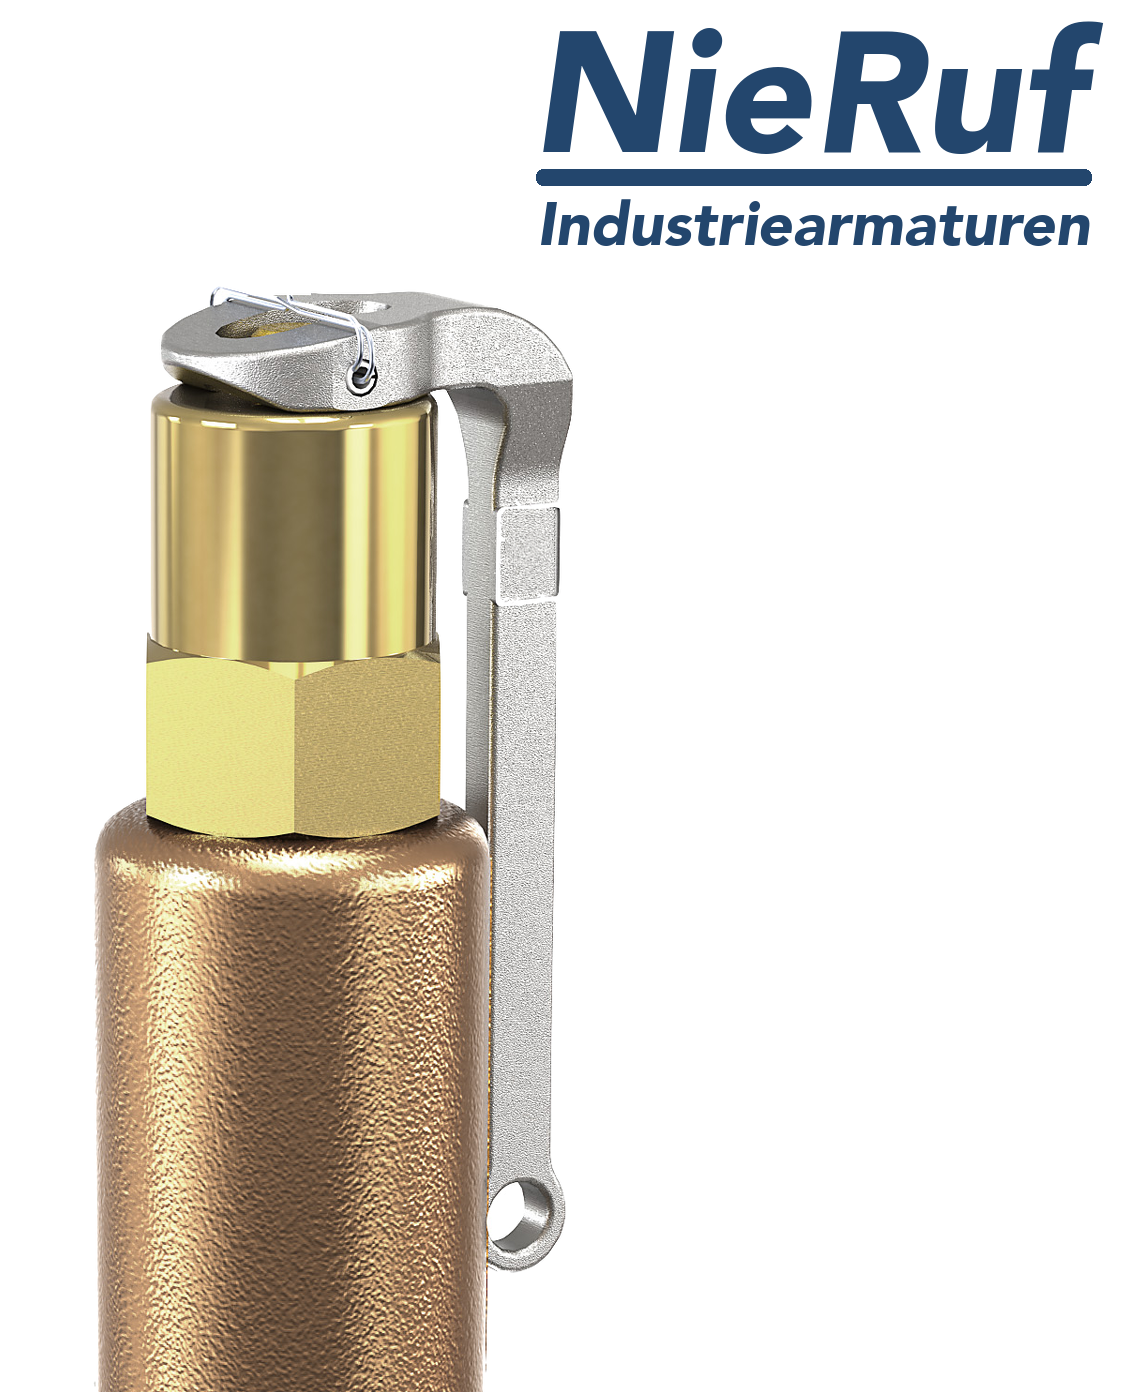 safety valve 1 1/2" x 2" fm SV03 neutral liquid media, gunmetal FKM, with lever